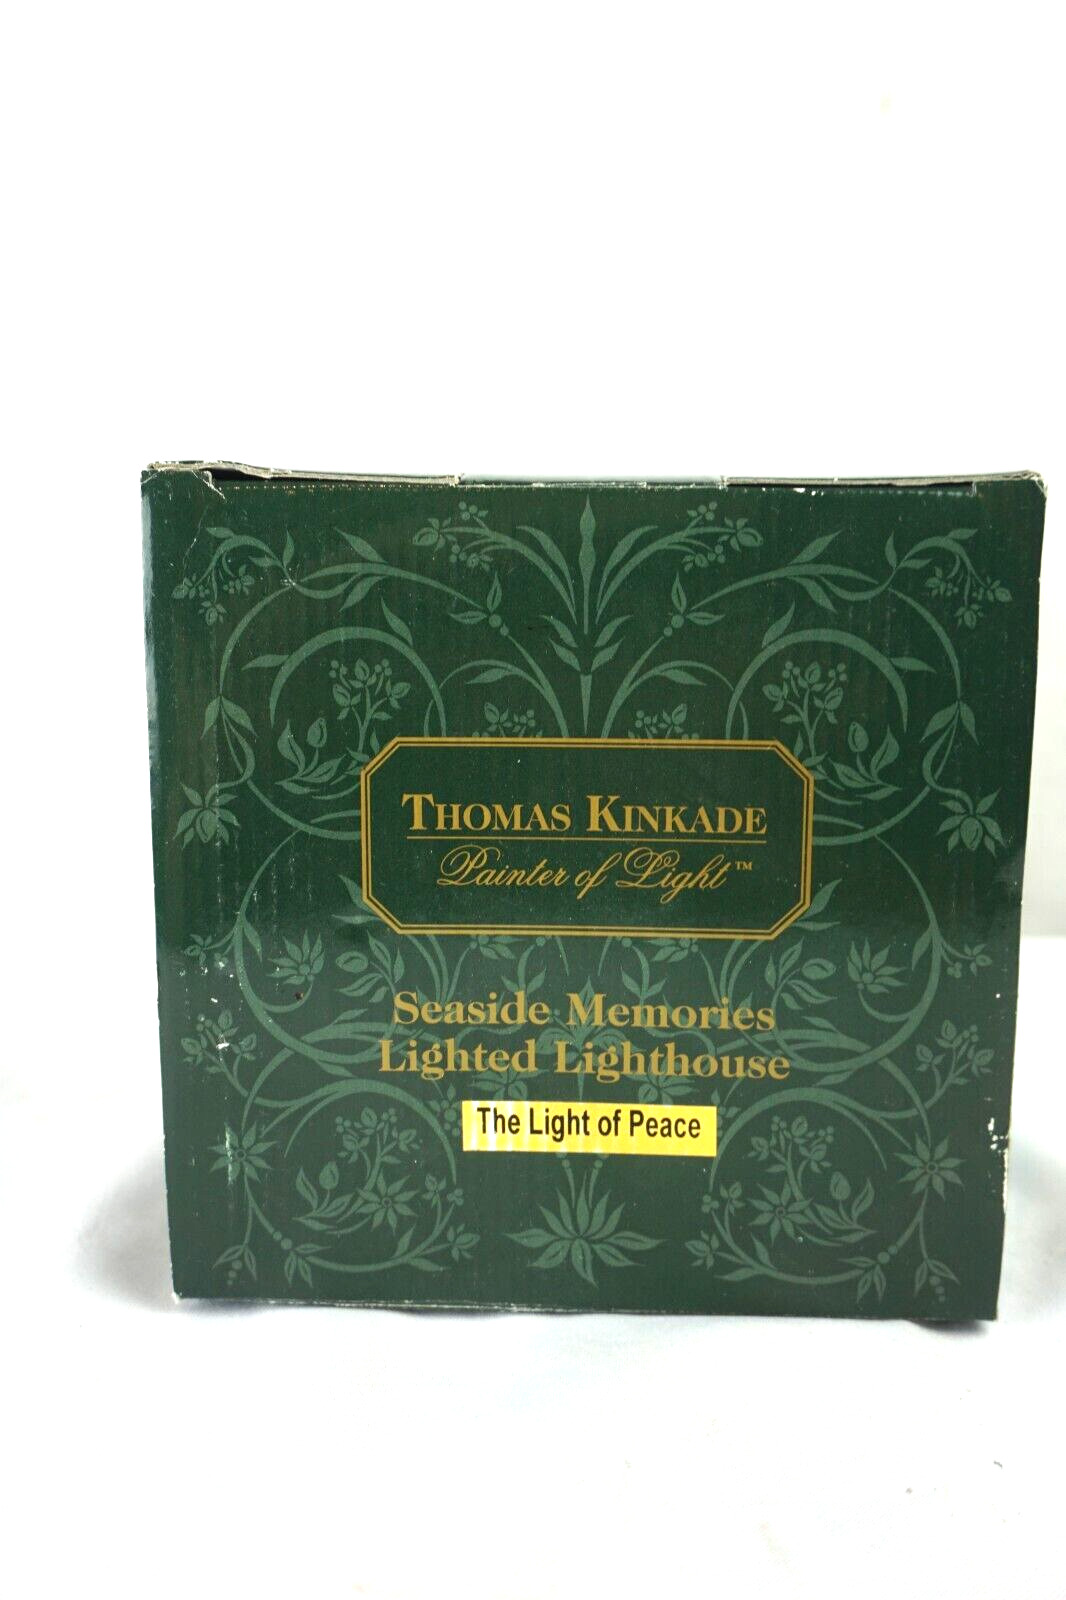 Thomas Kinkade The Light of Peace Seaside Memories Lighted Lighthouse NEW